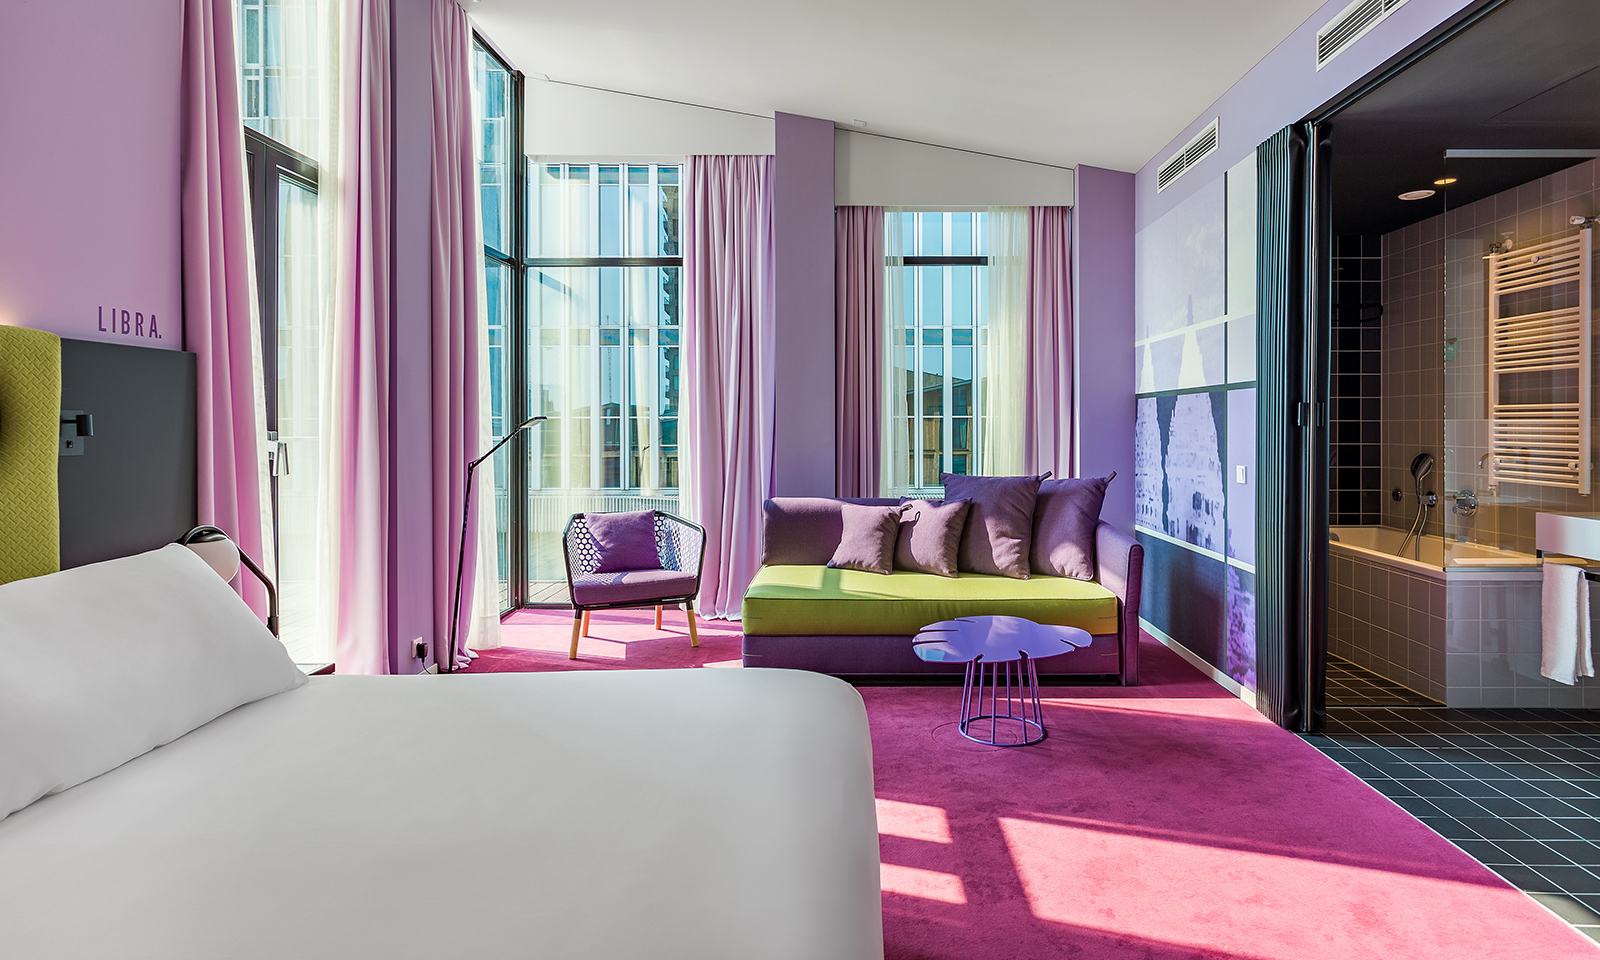 Room Mate Bruno - Rotterdam Cruise Port hotel - ROOMS